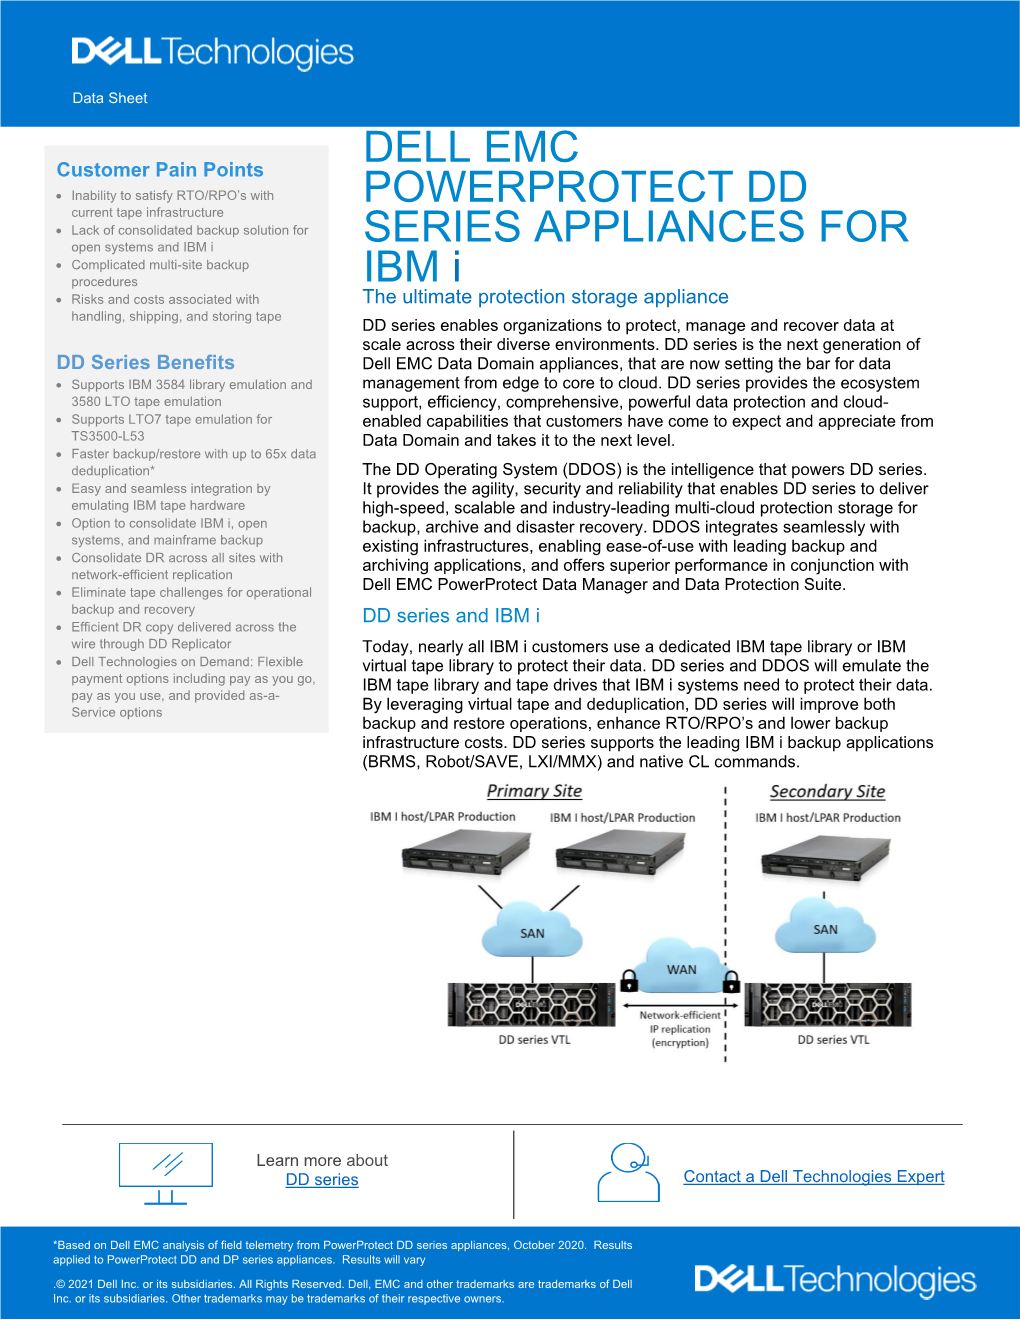 DELL EMC POWERPROTECT DD SERIES APPLIANCES for IBM I